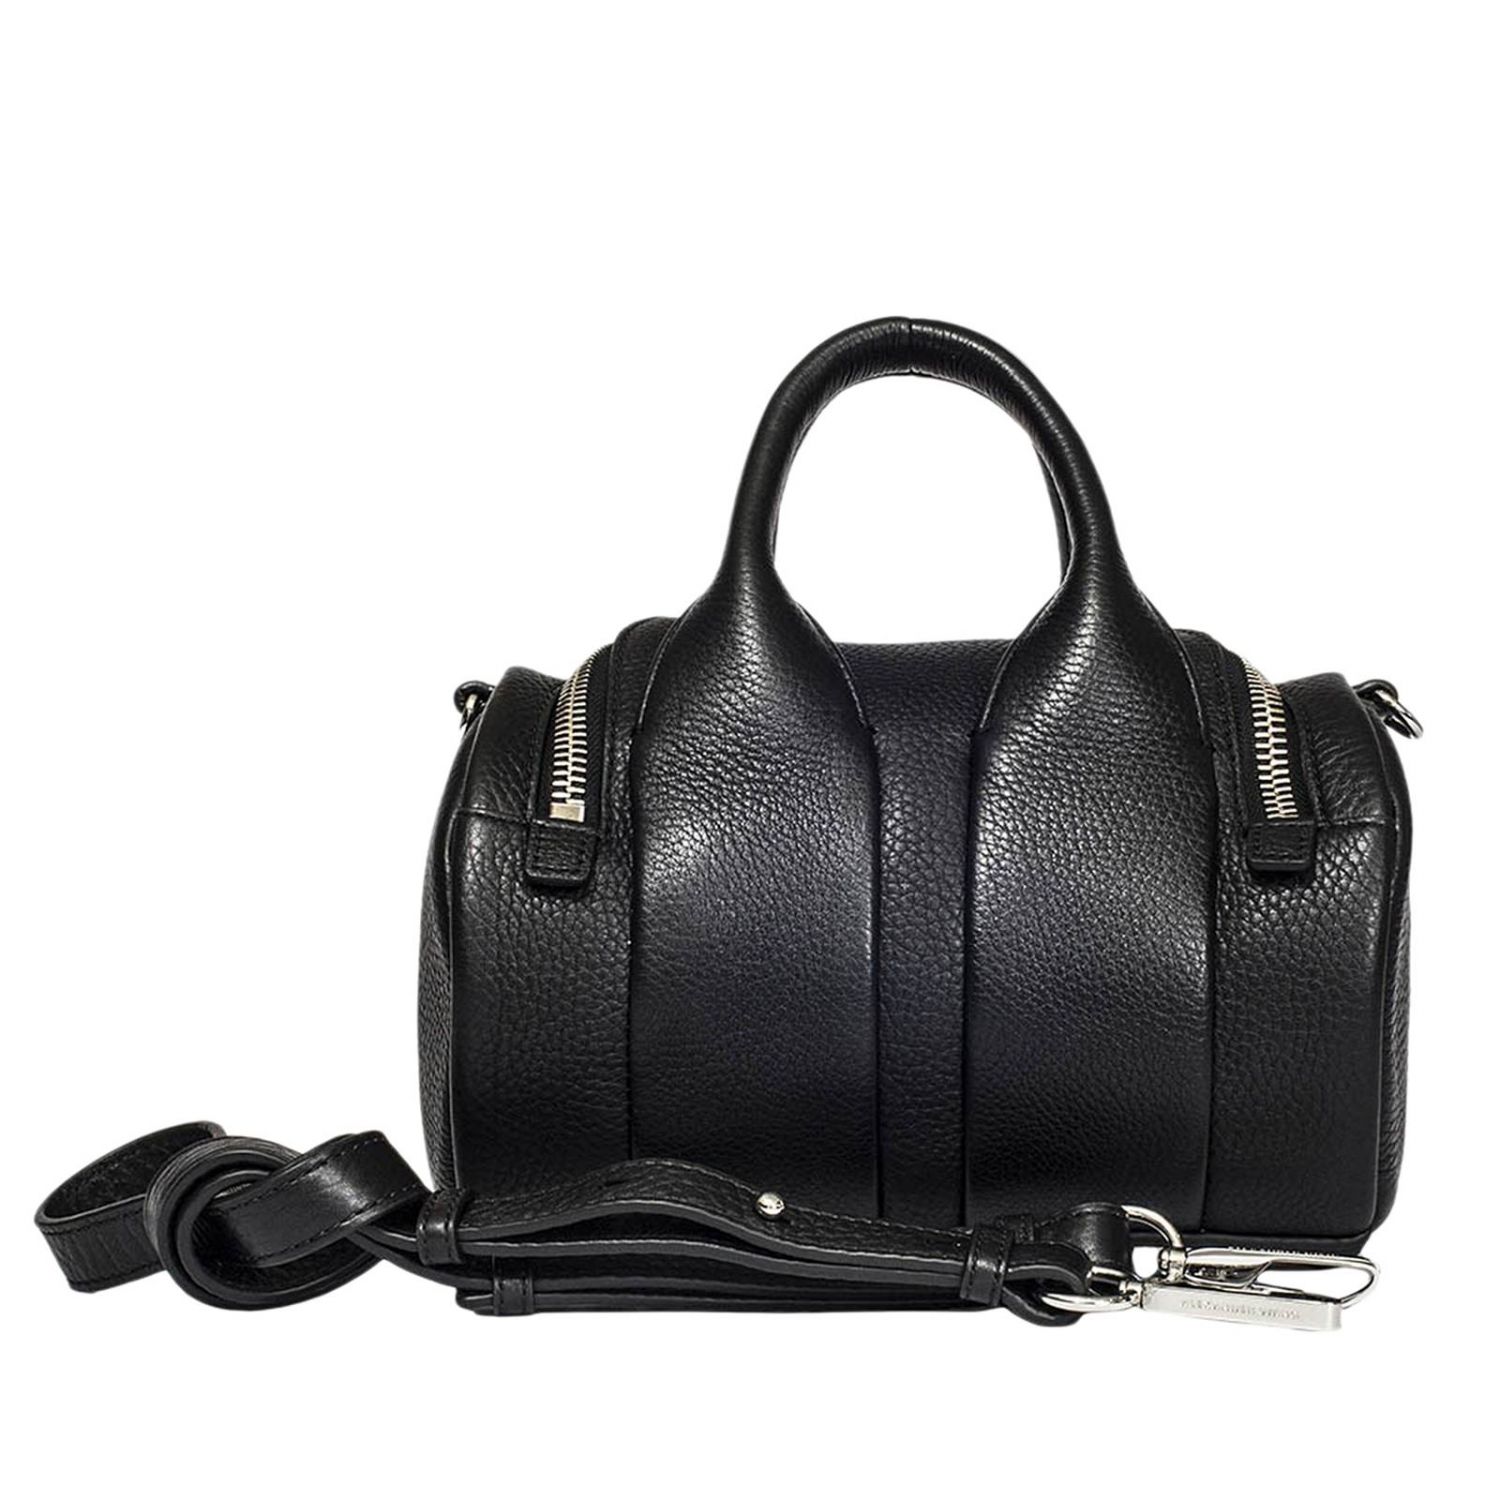 Alexander Wang Outlet: Handbag women - Black | Handbag Alexander Wang ...